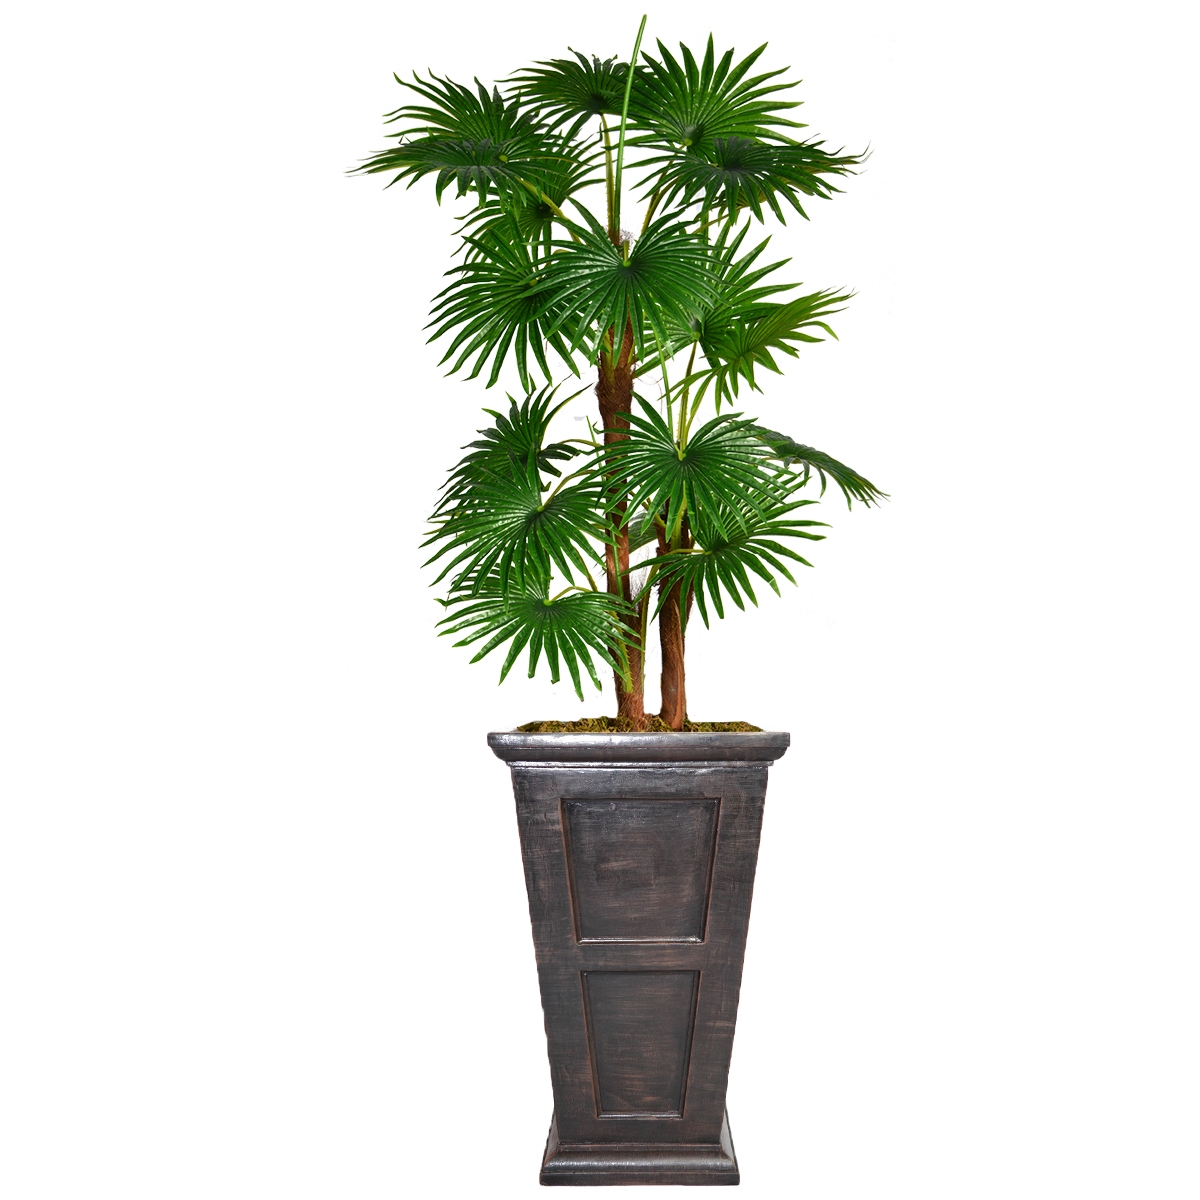 66.8" Tall Fan Palm Tree Artificial Decor Faux Burlap Kit and Fiberstone Planter - Assorted